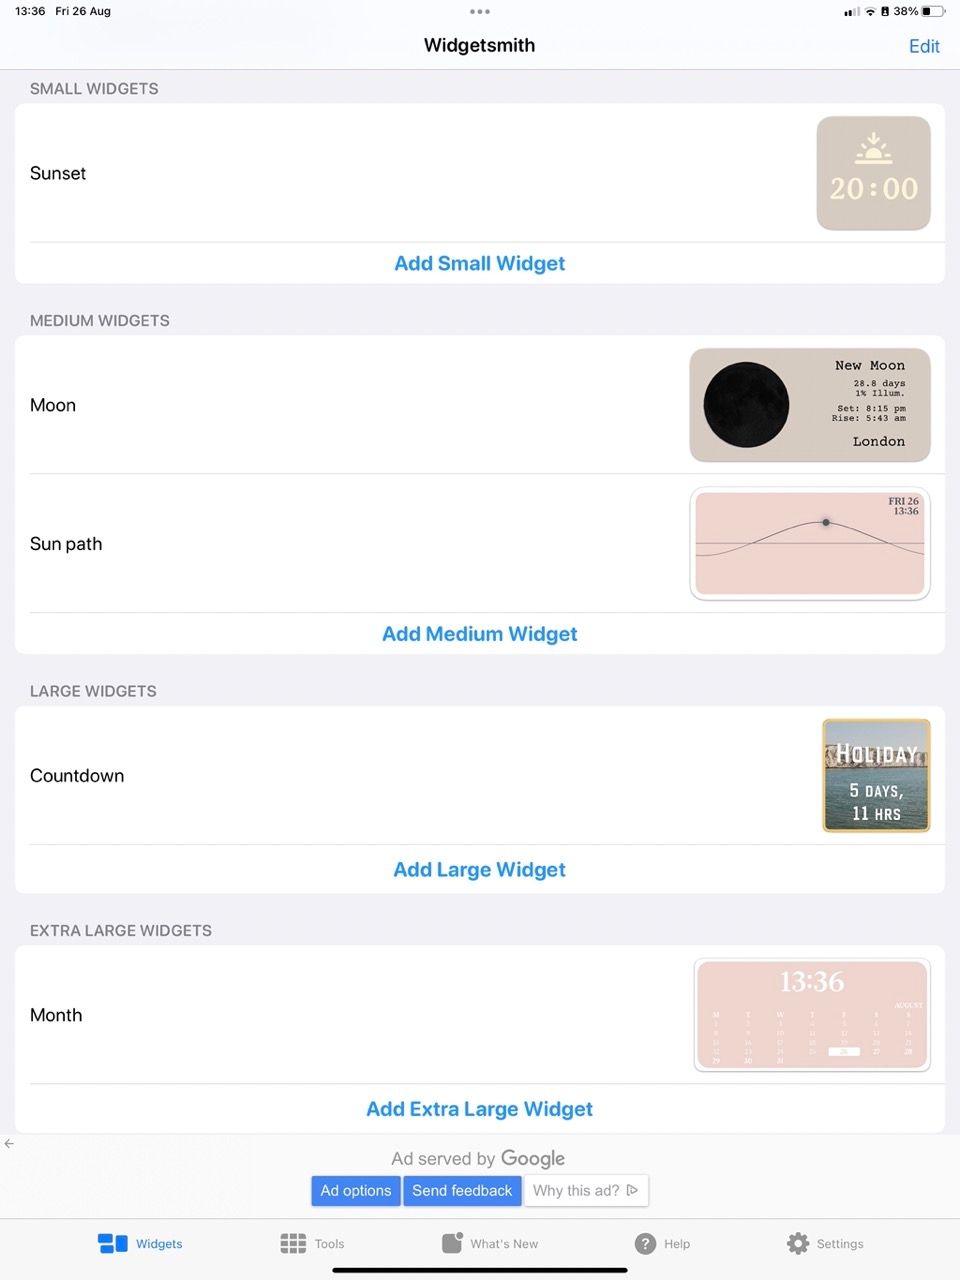 My Widgets in Widgetsmith App for iPad